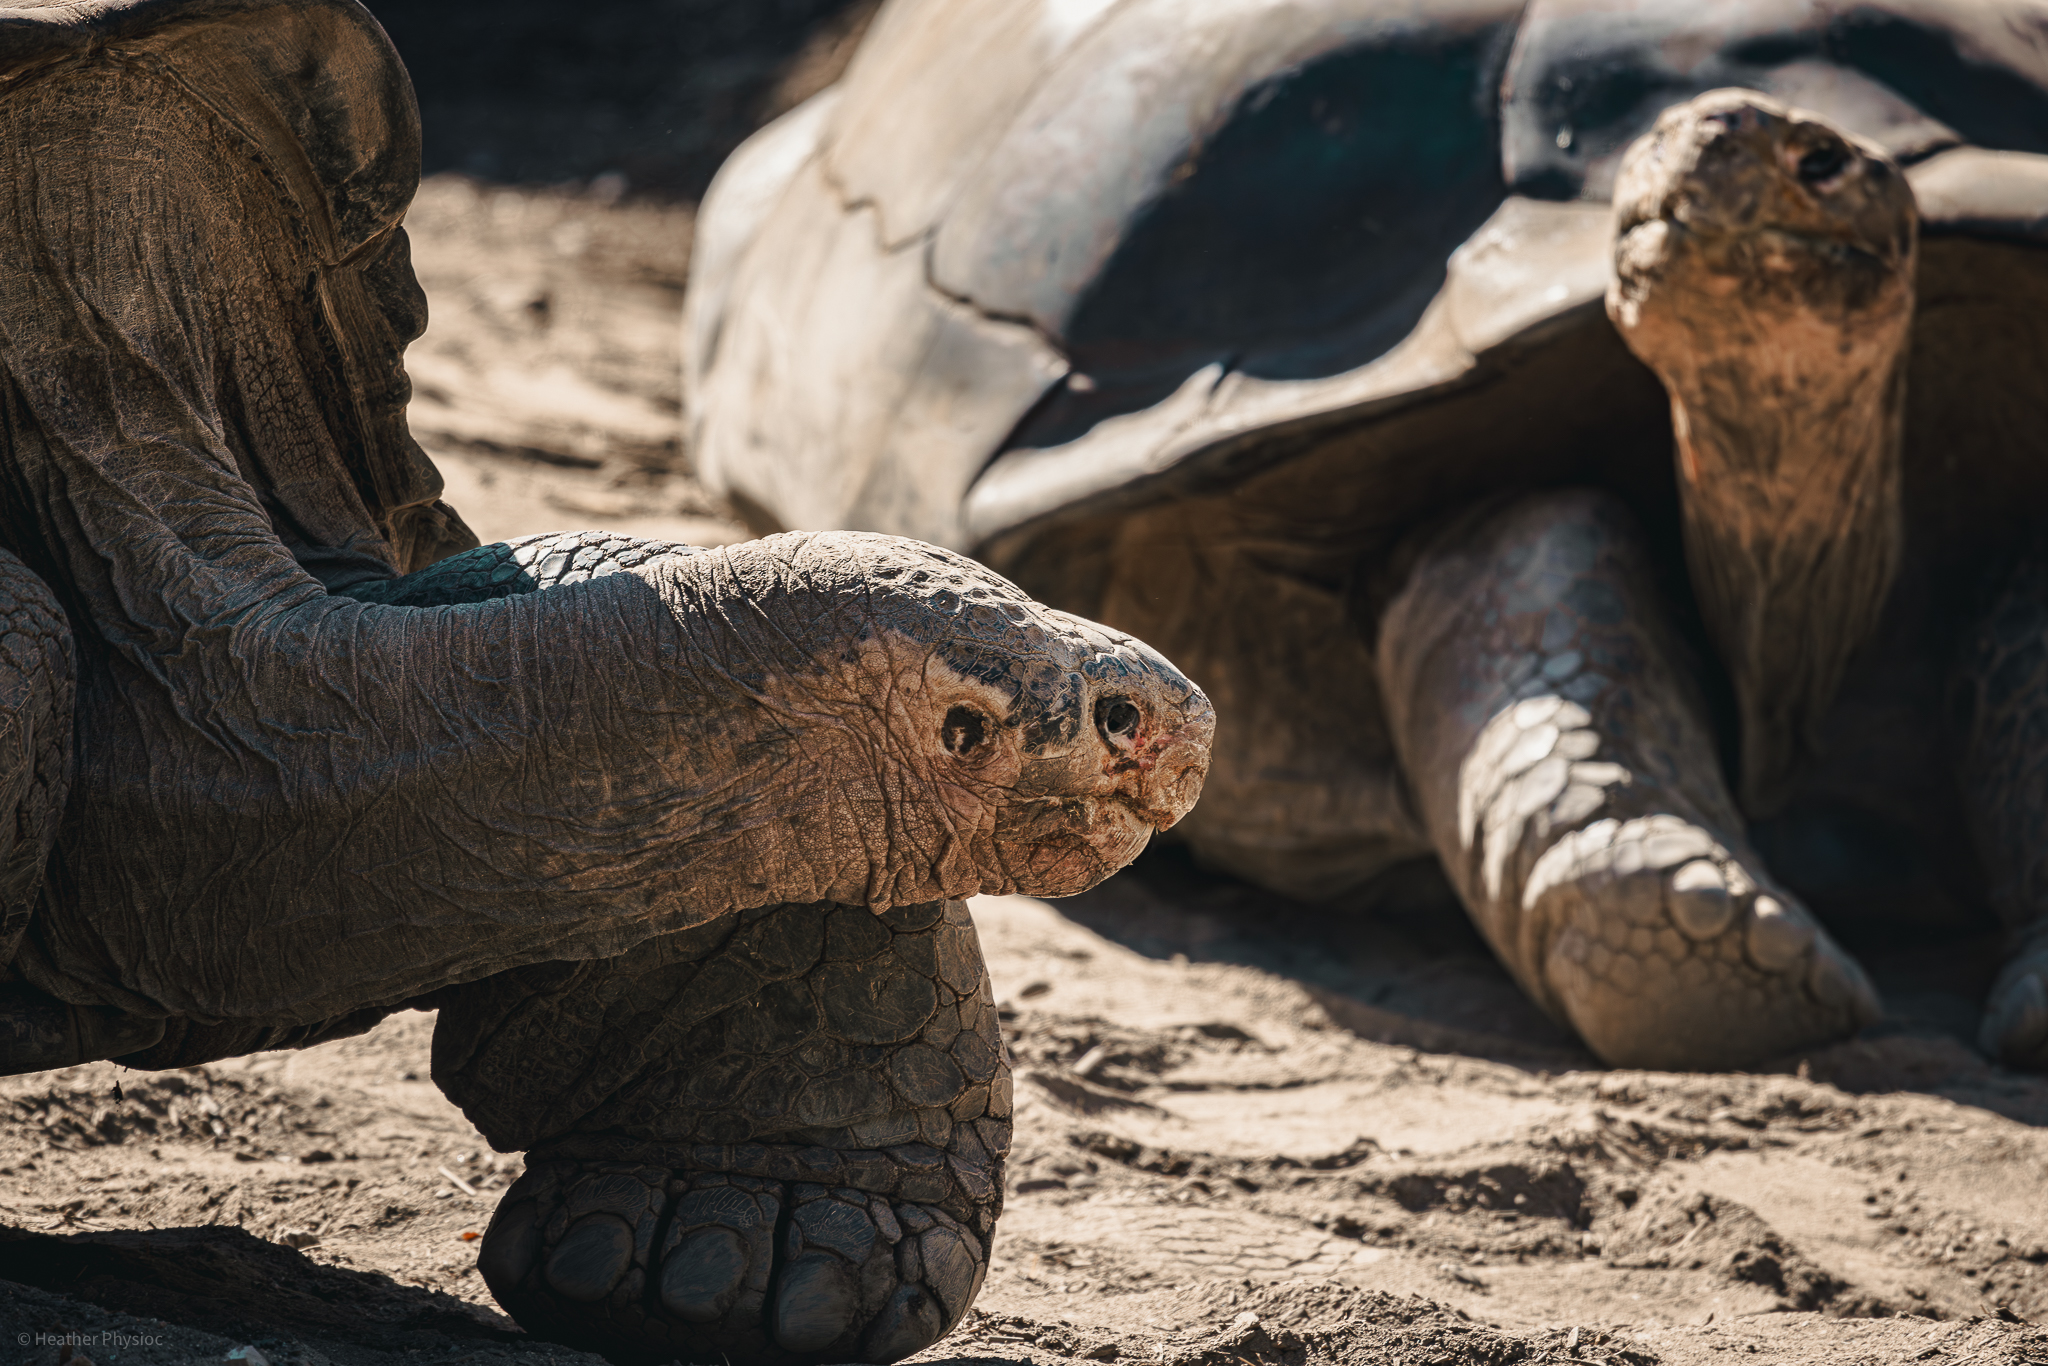 Pair of giant Galapagos tortoises at the San Diego Zoo